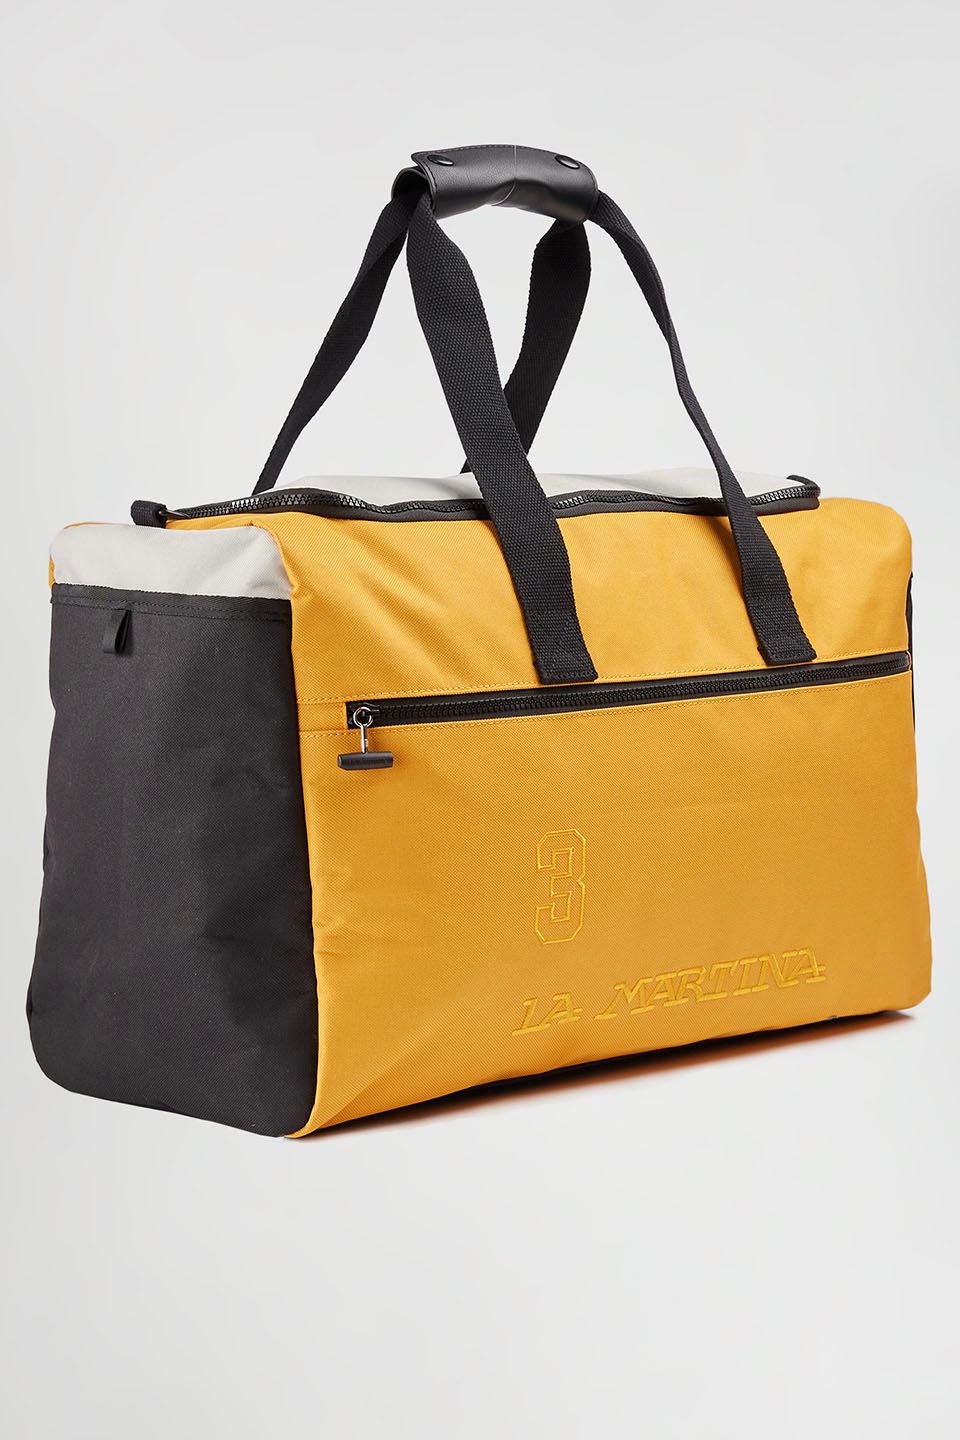 Reisetasche aus Polyester | La Martina - Official Online Shop